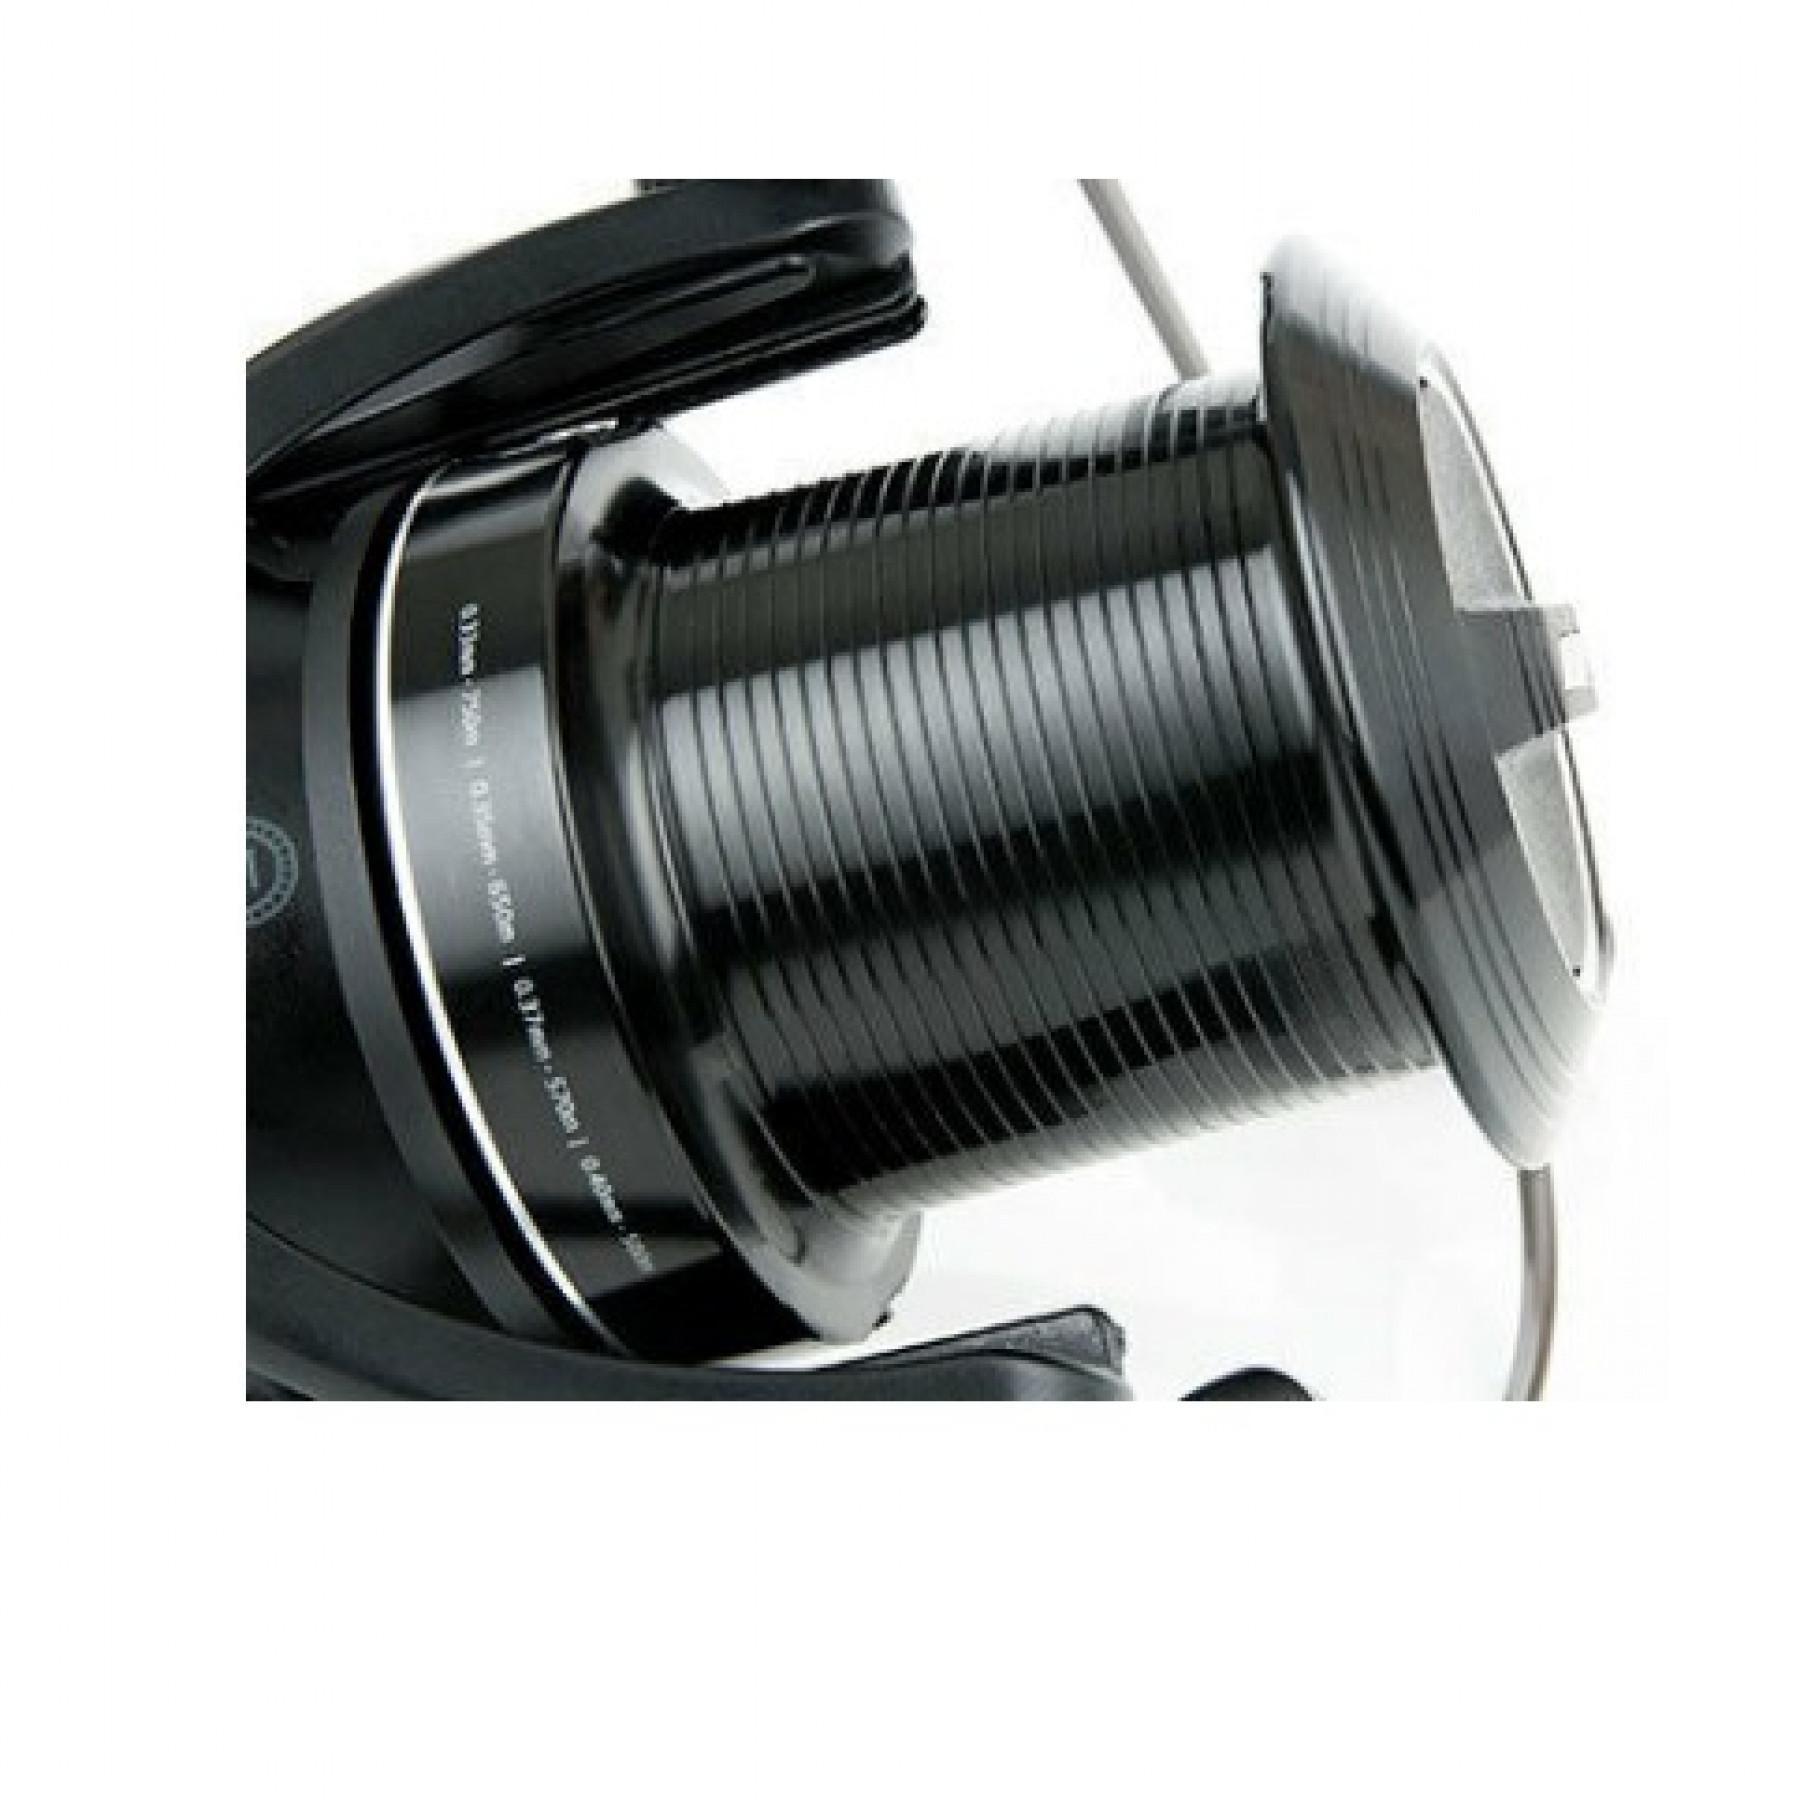 Spare spool for reel Fox FX 13 Standard